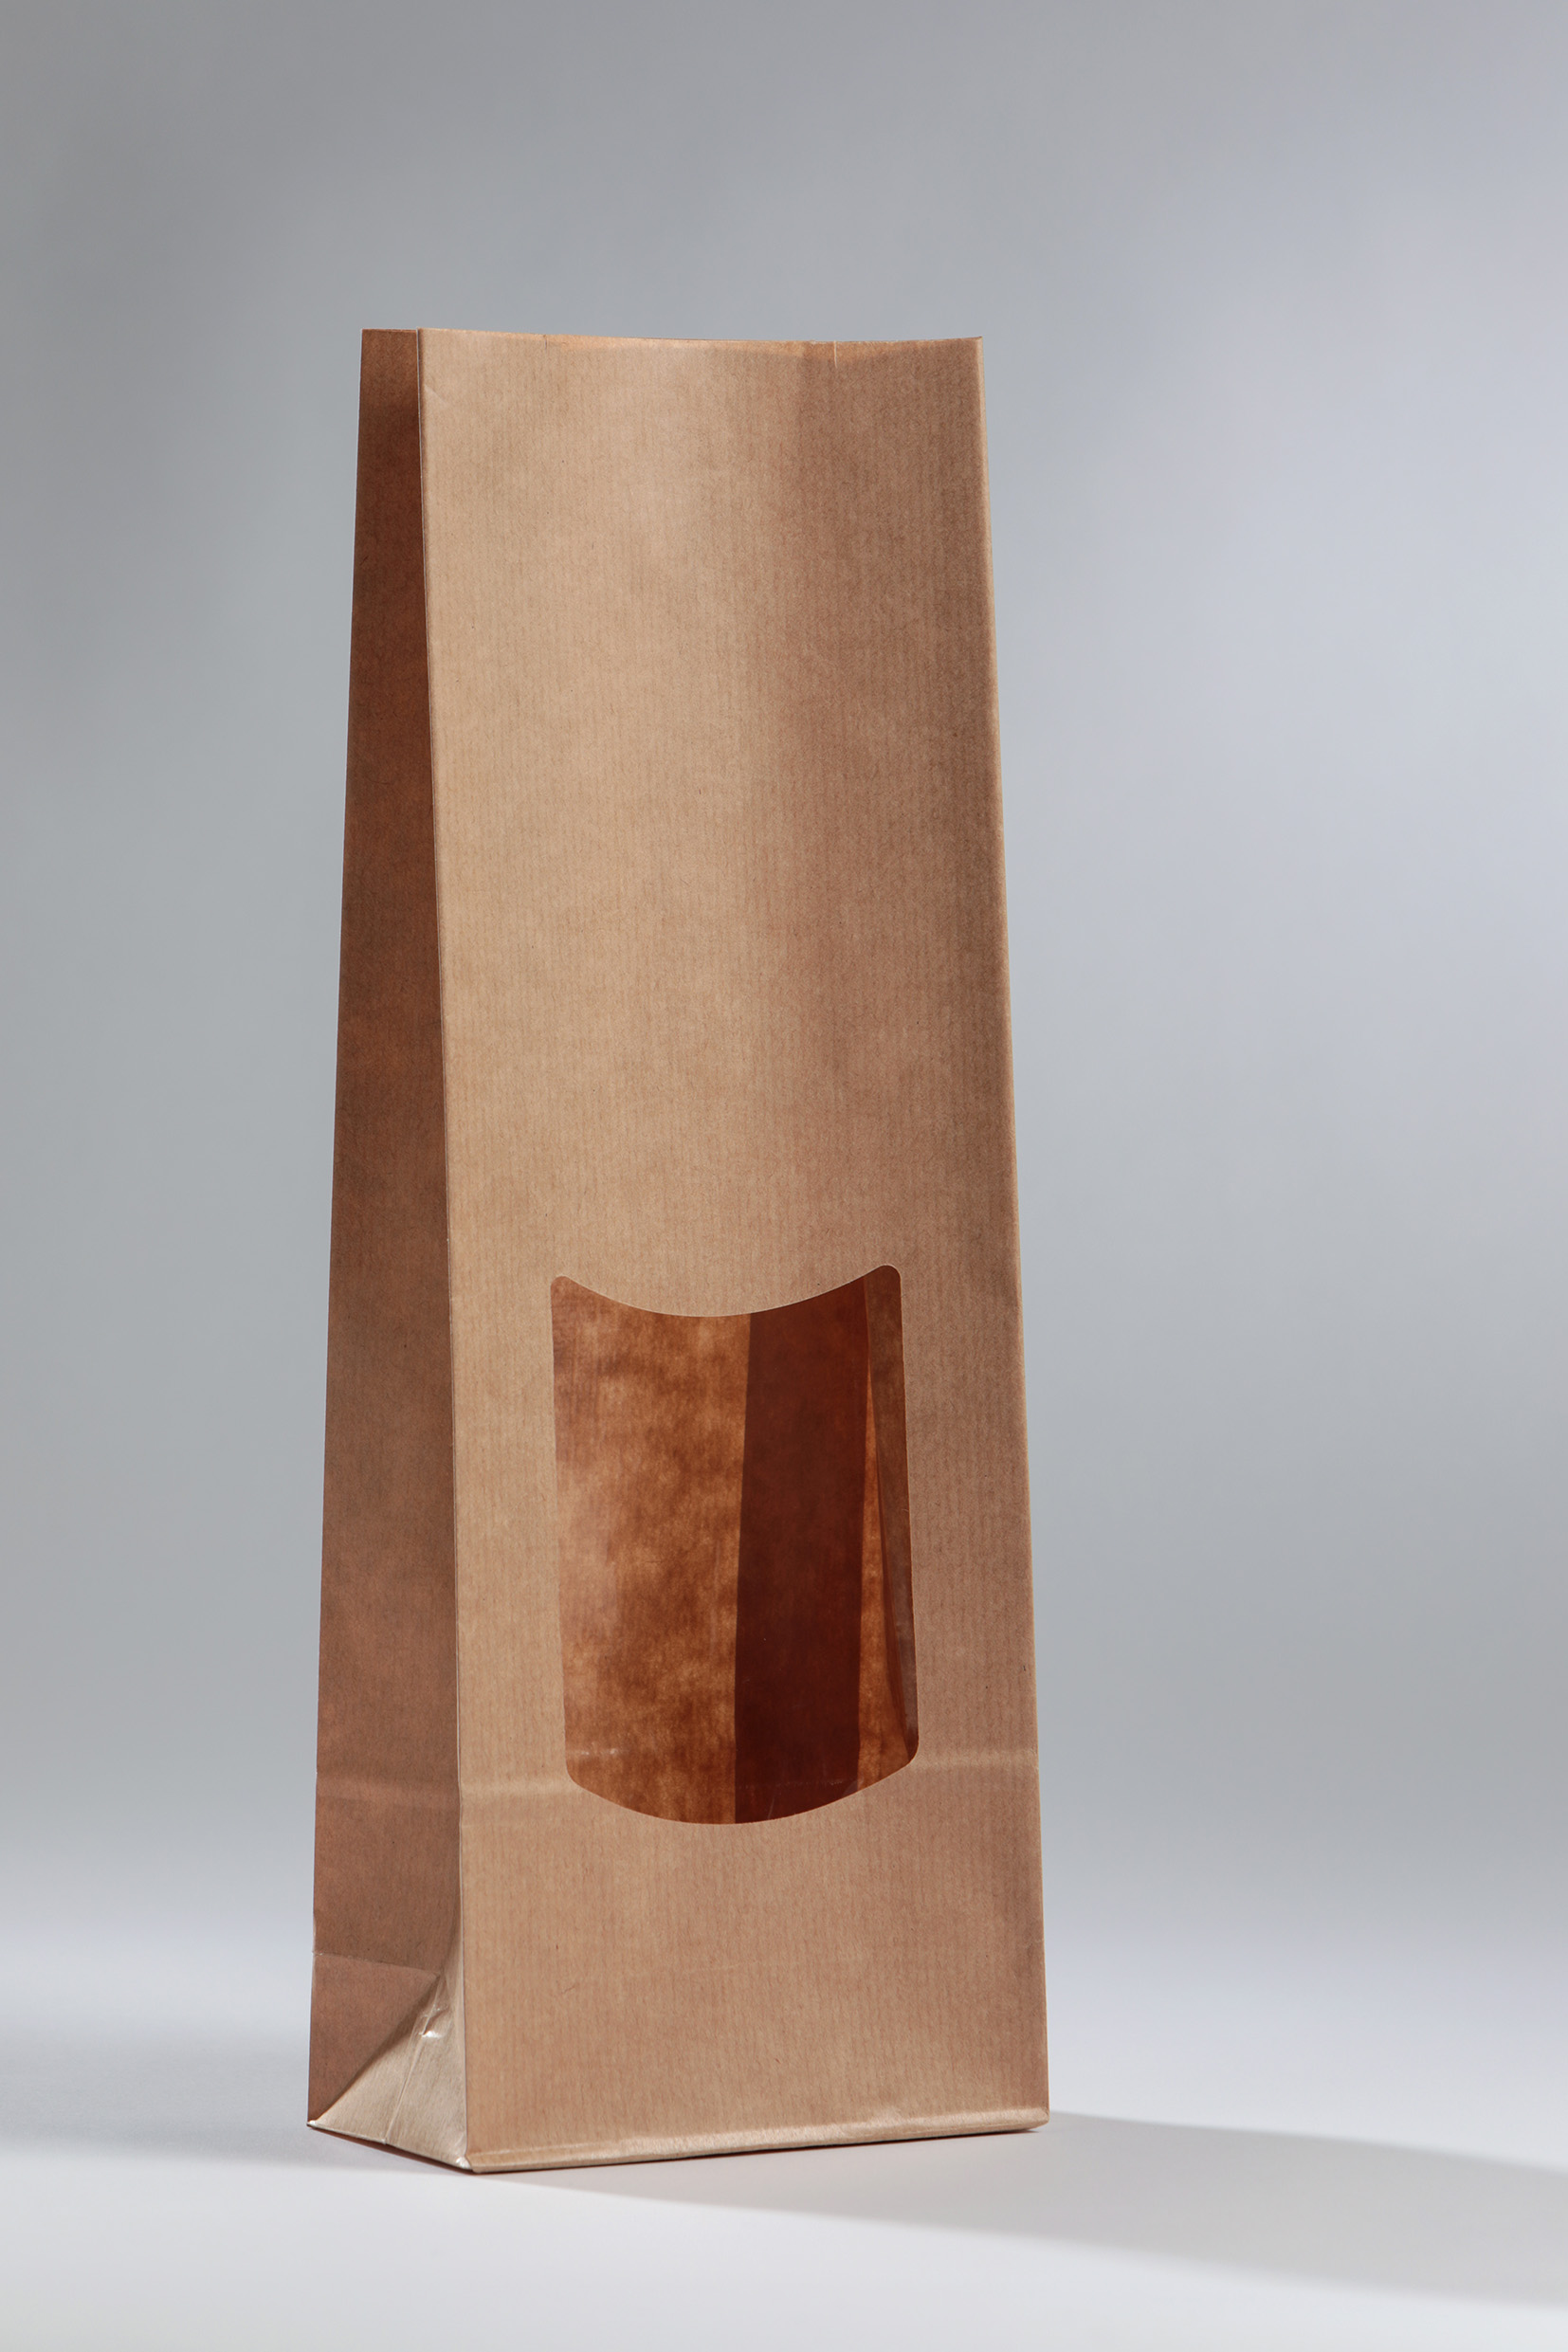 reutilizables pequeñas bolsas de papel marrón MeYuxg Bolsas de papel kraft con ventana transparente 100 unidades 10 x 15 cm para aperitivos té café o alimentos 